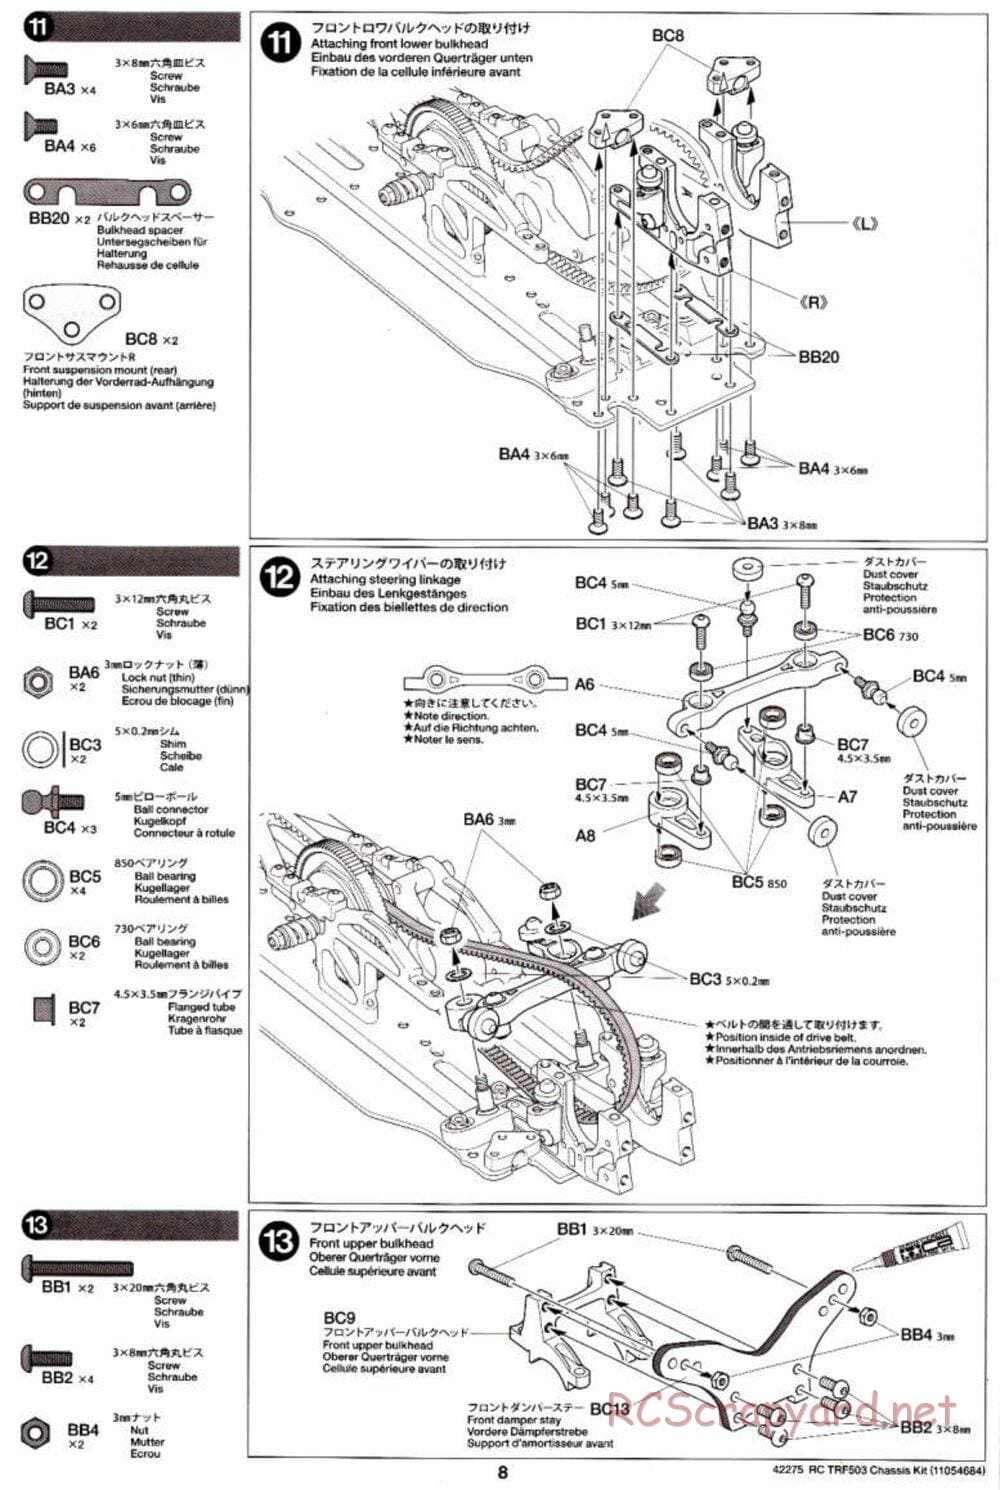 Tamiya - TRF503 Chassis - Manual - Page 8